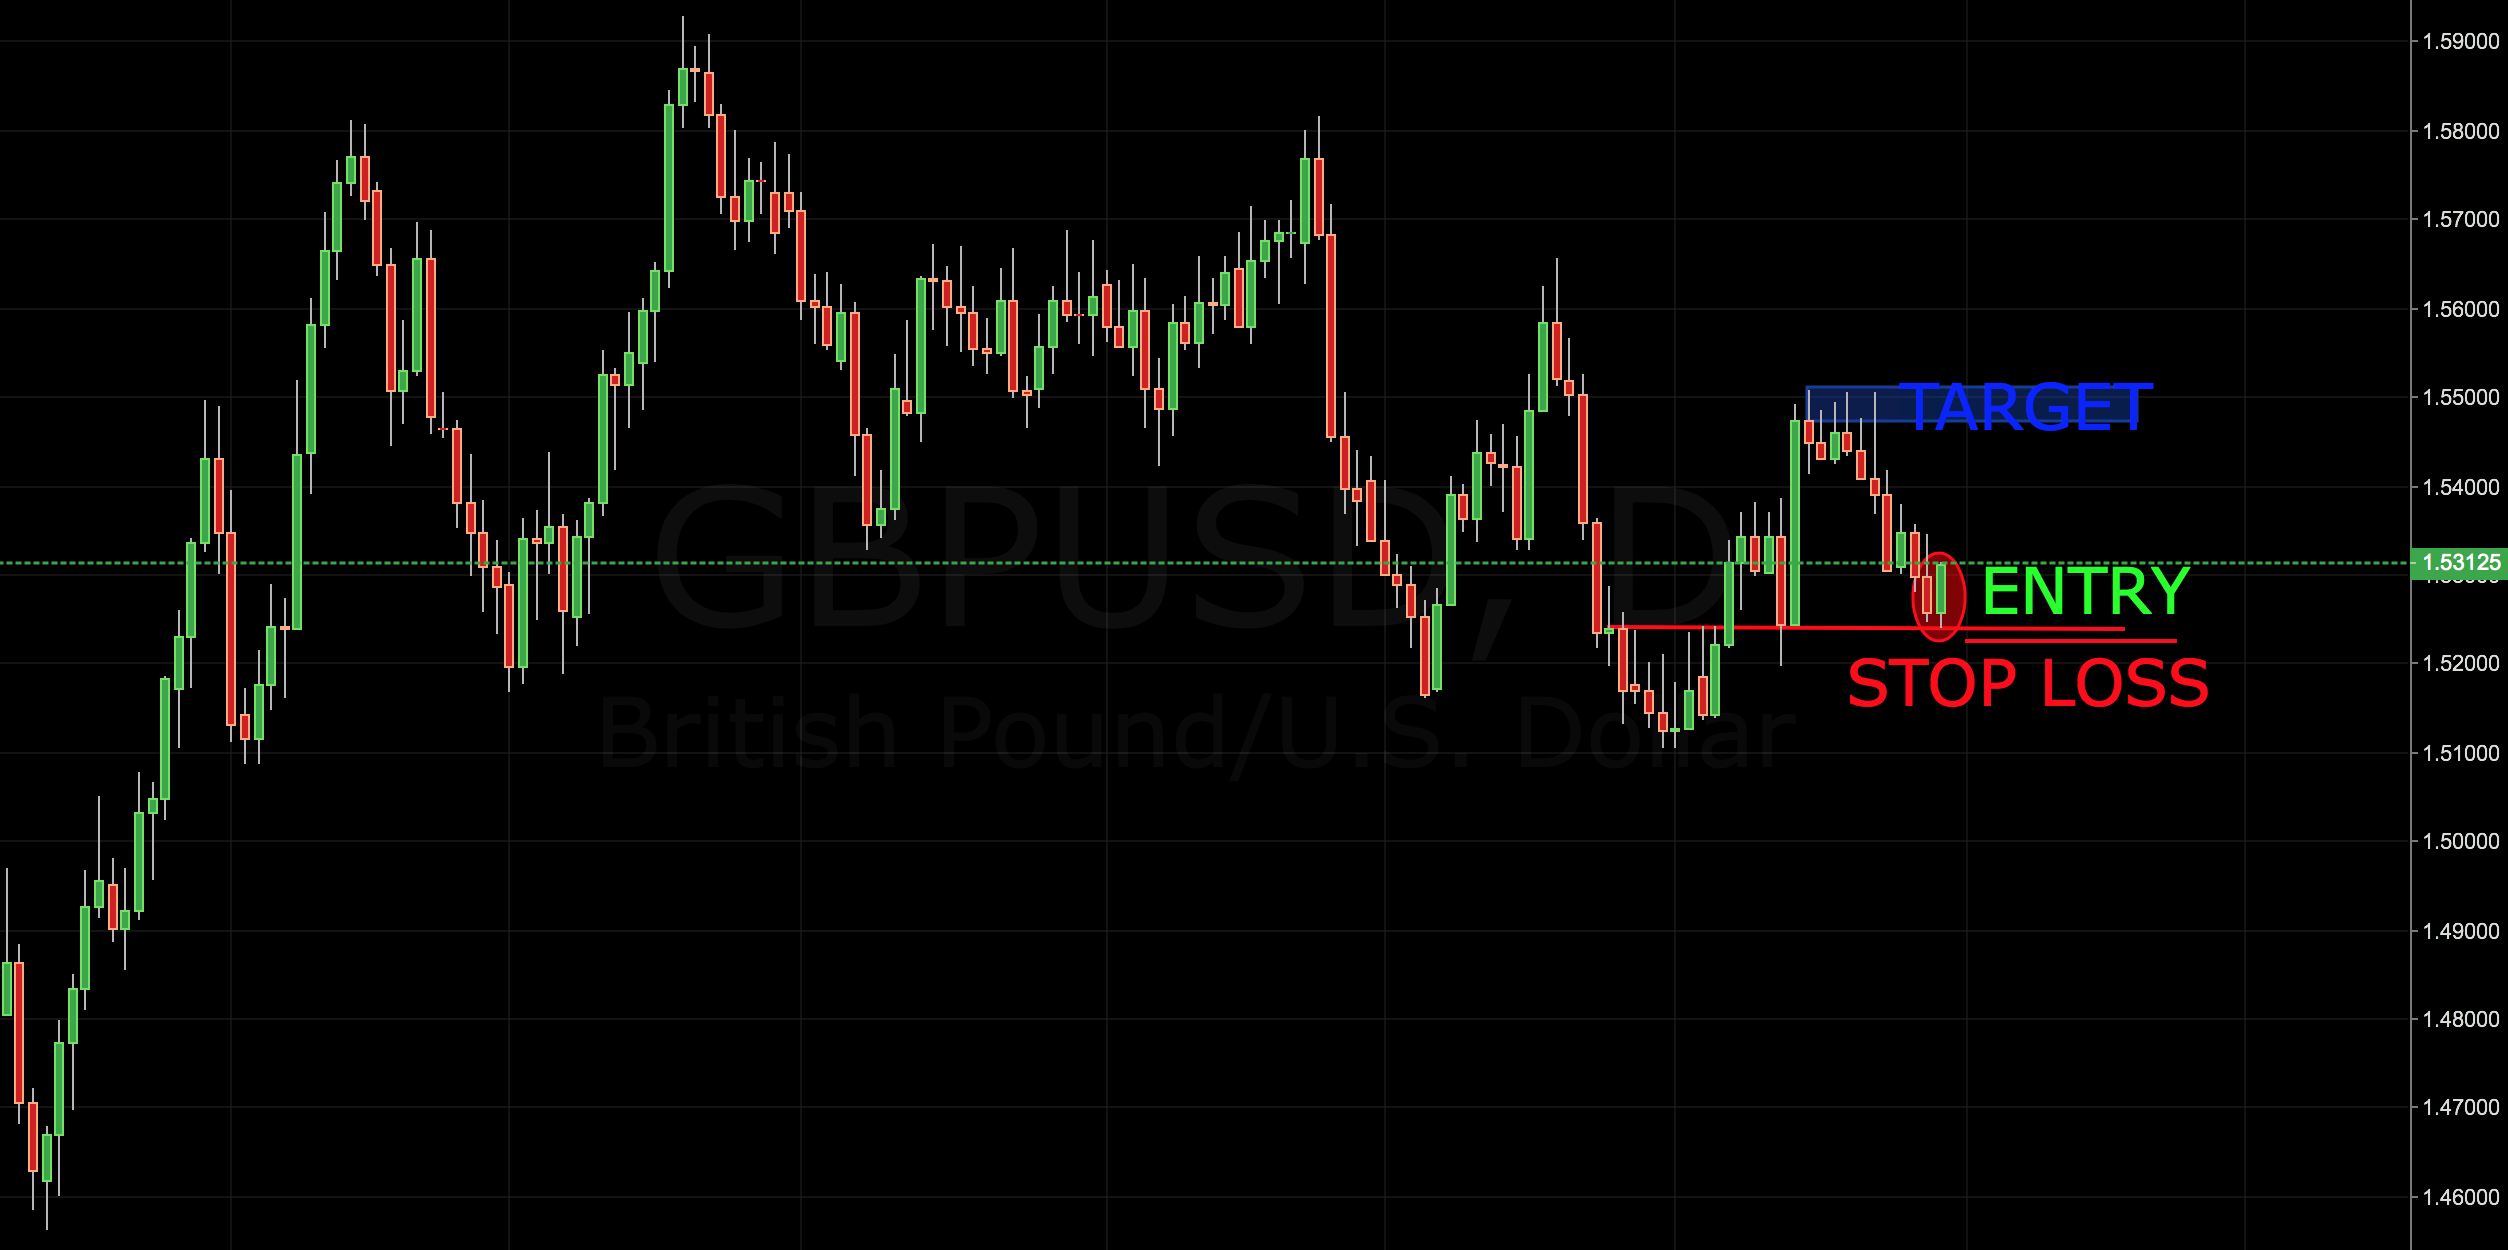 gbp/usd trading signal